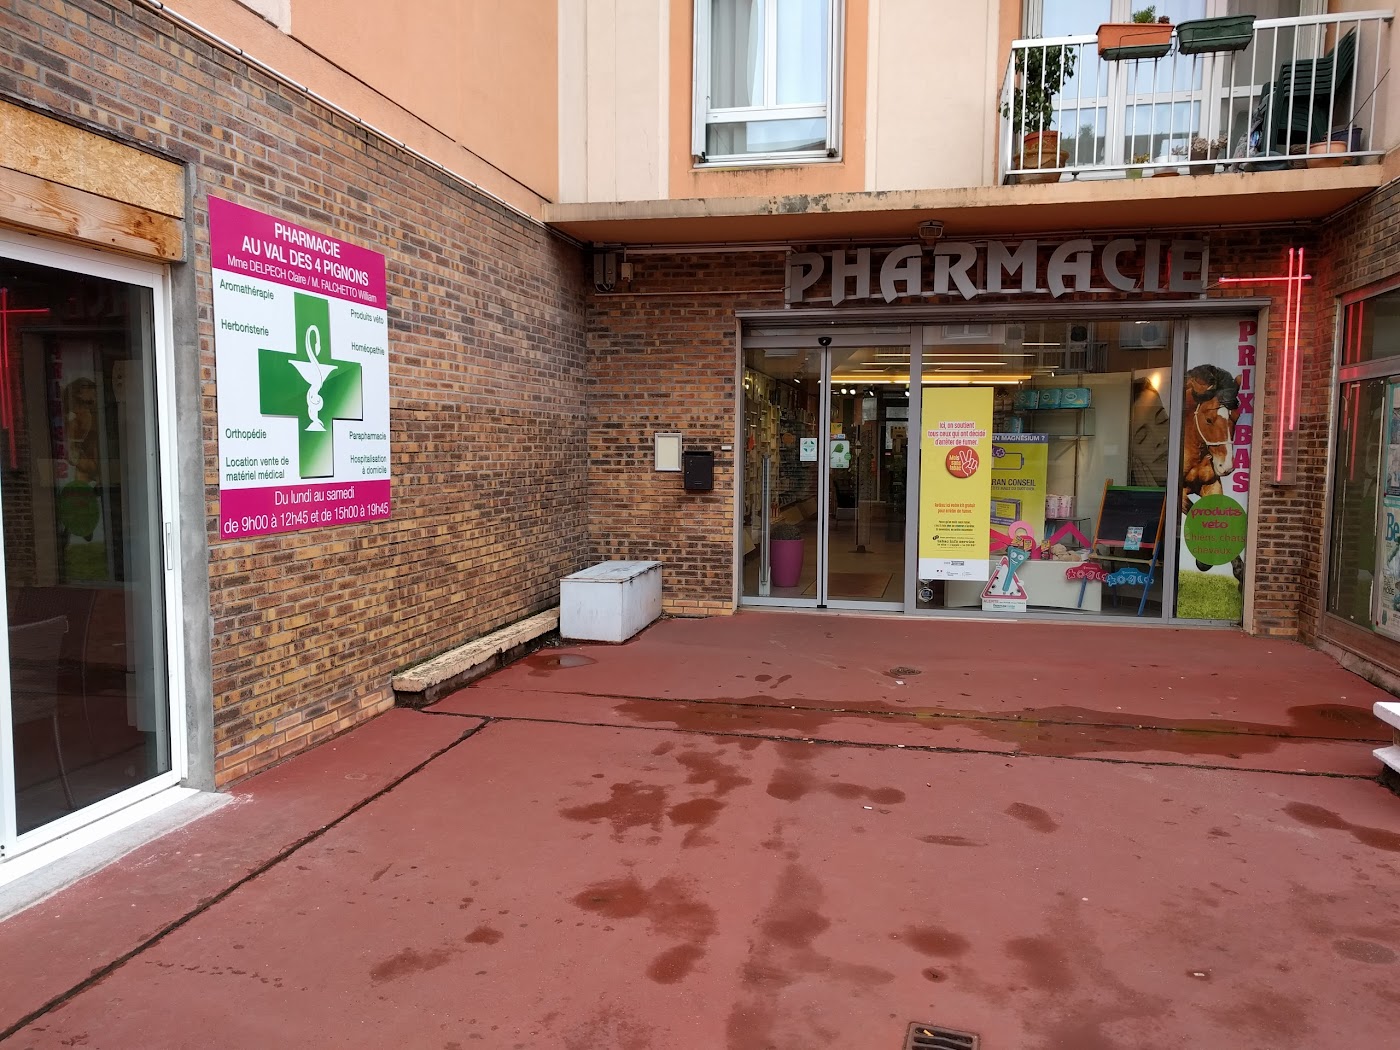 Pharmacie Au Val des 4 pignons